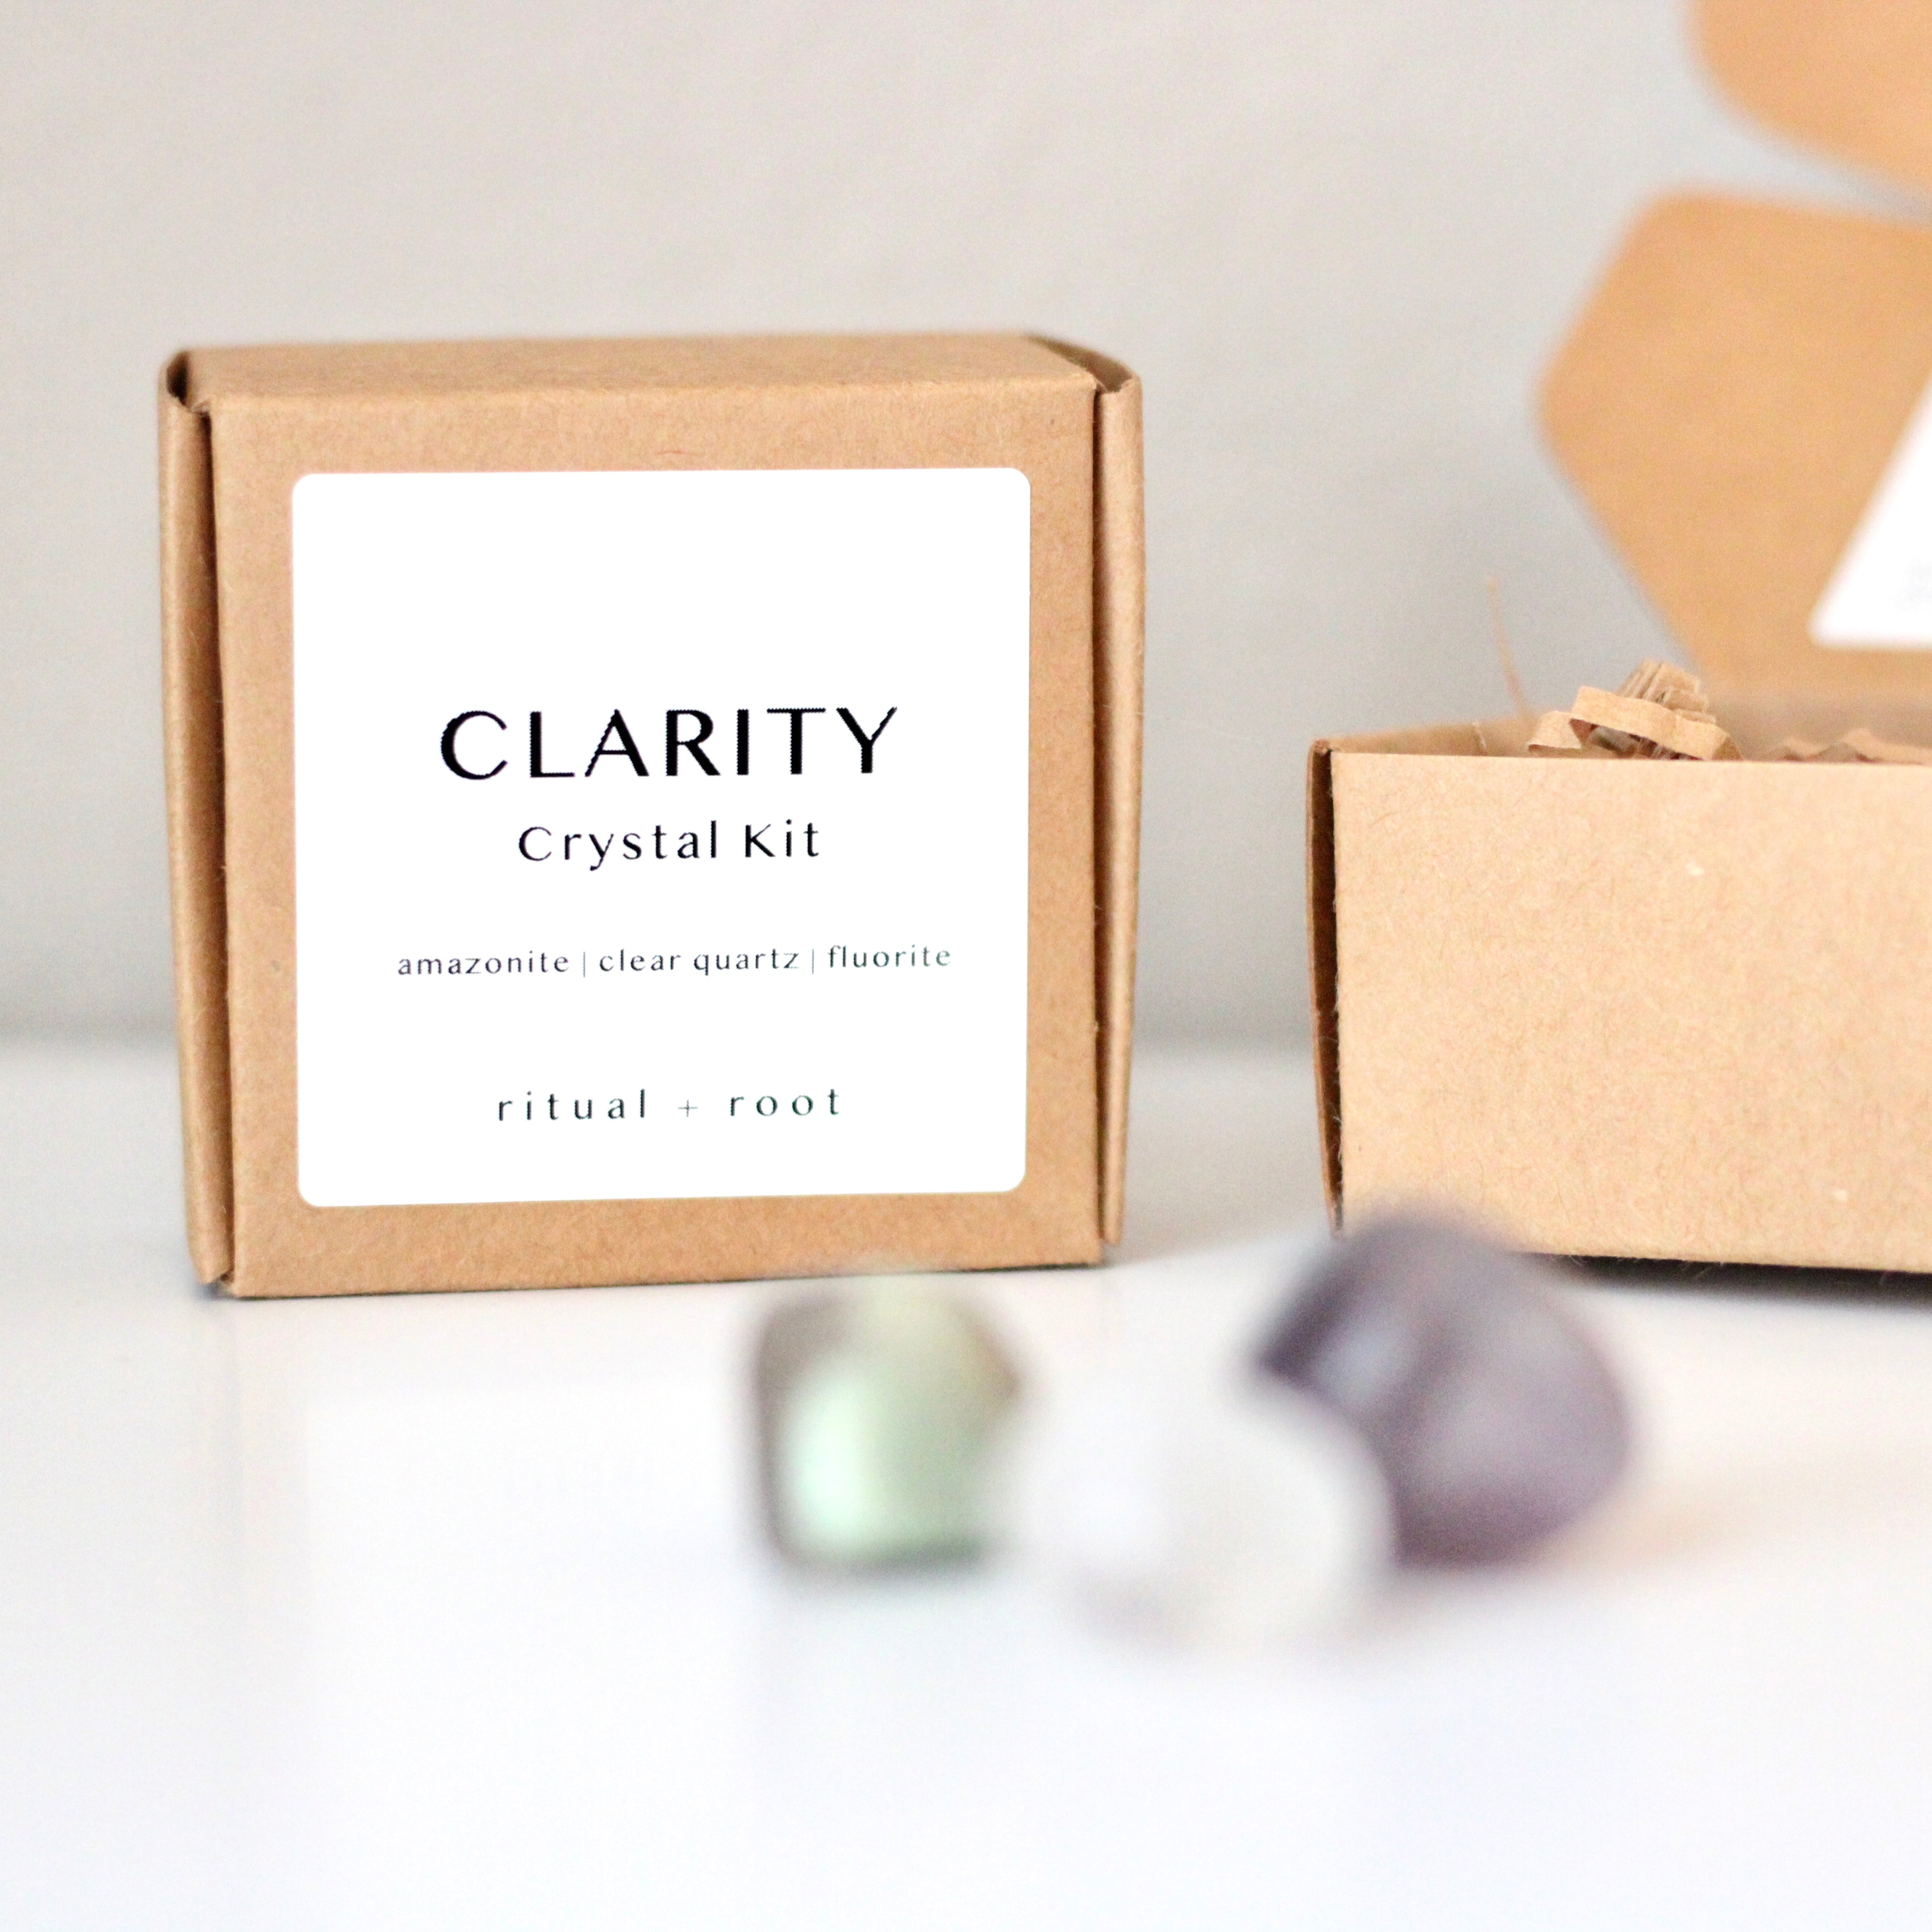 CLARITY Crystal Kit